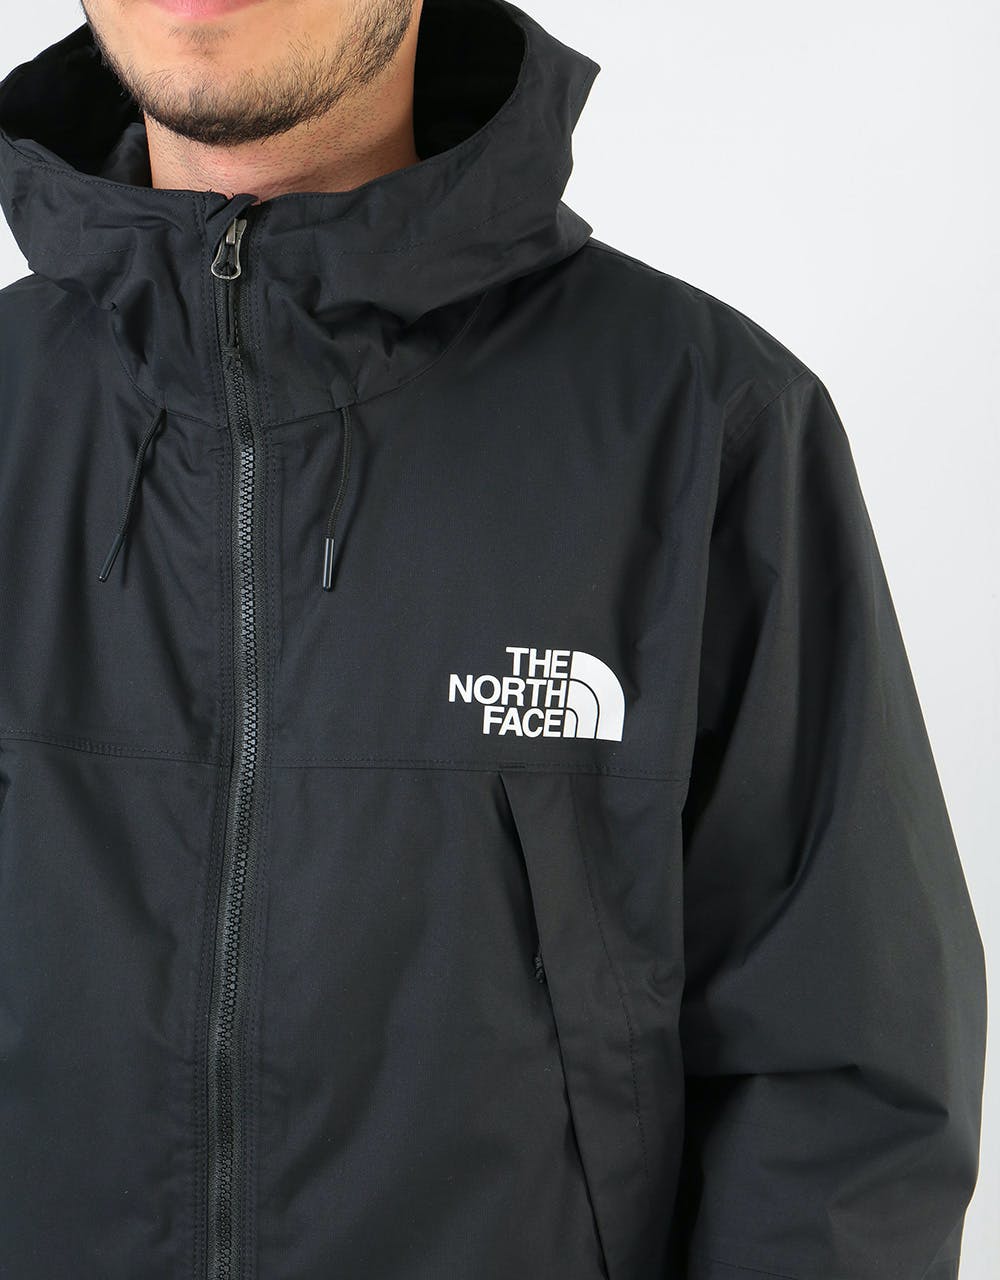 The North Face 1990 Mountain Q Jacket - TNF Black/TNF White/TNF White